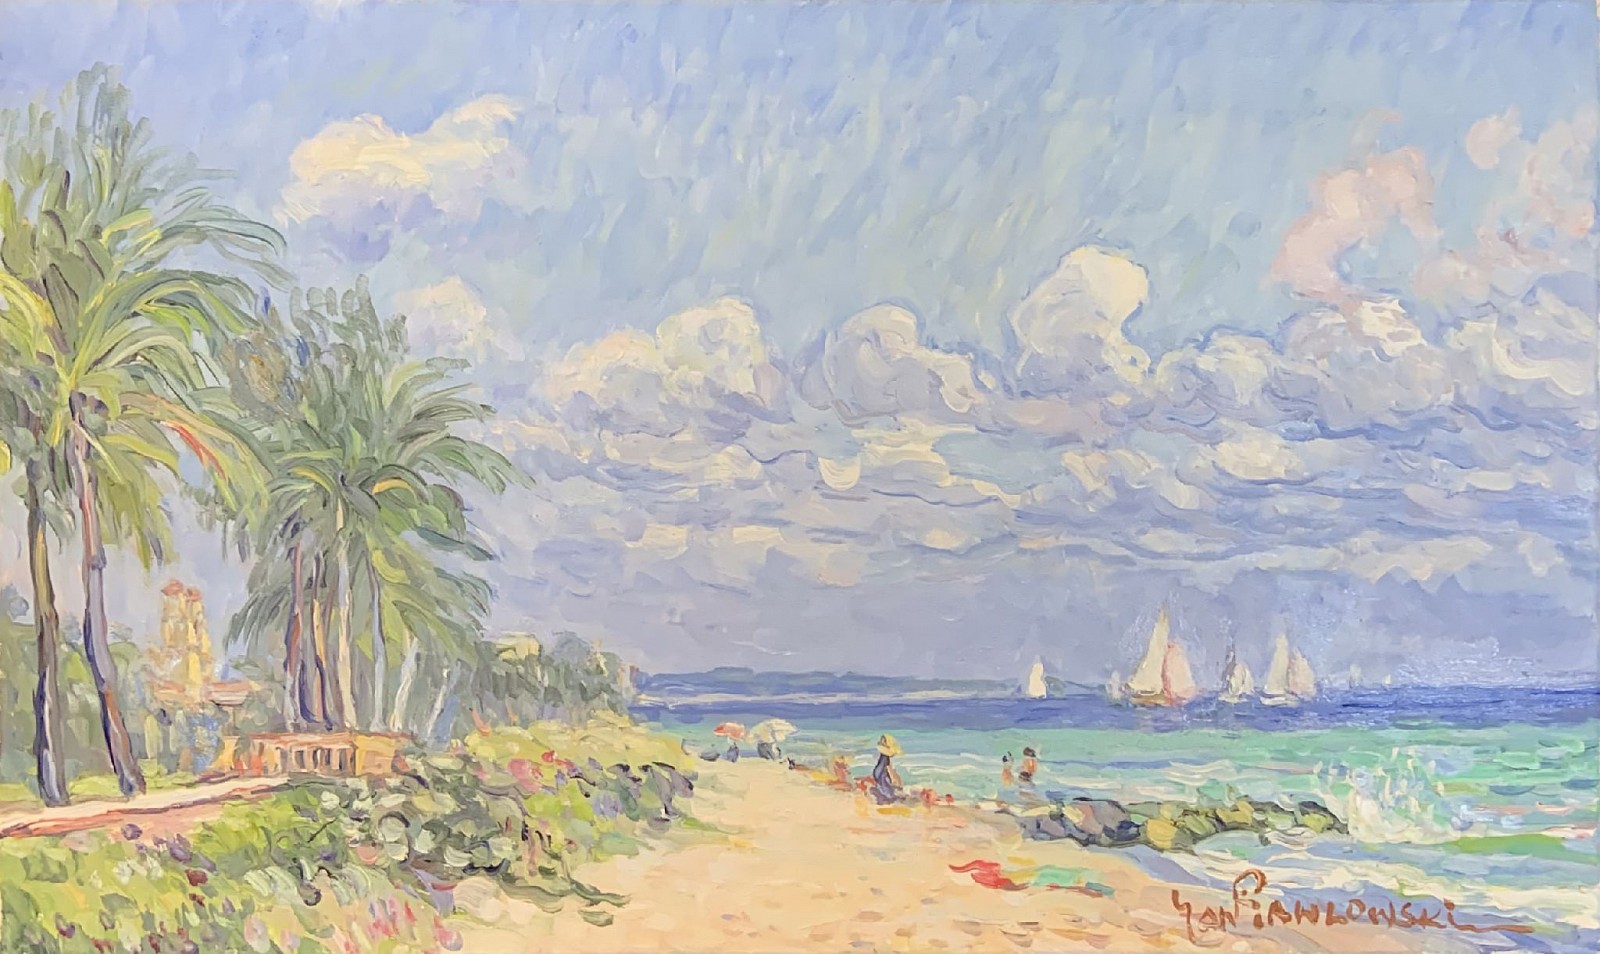 Jan Pawlowski, Palm Beach Seascape, 2023
oil on canvas, 12 x 20 in. (30.5 x 50.8 cm)
JP230305